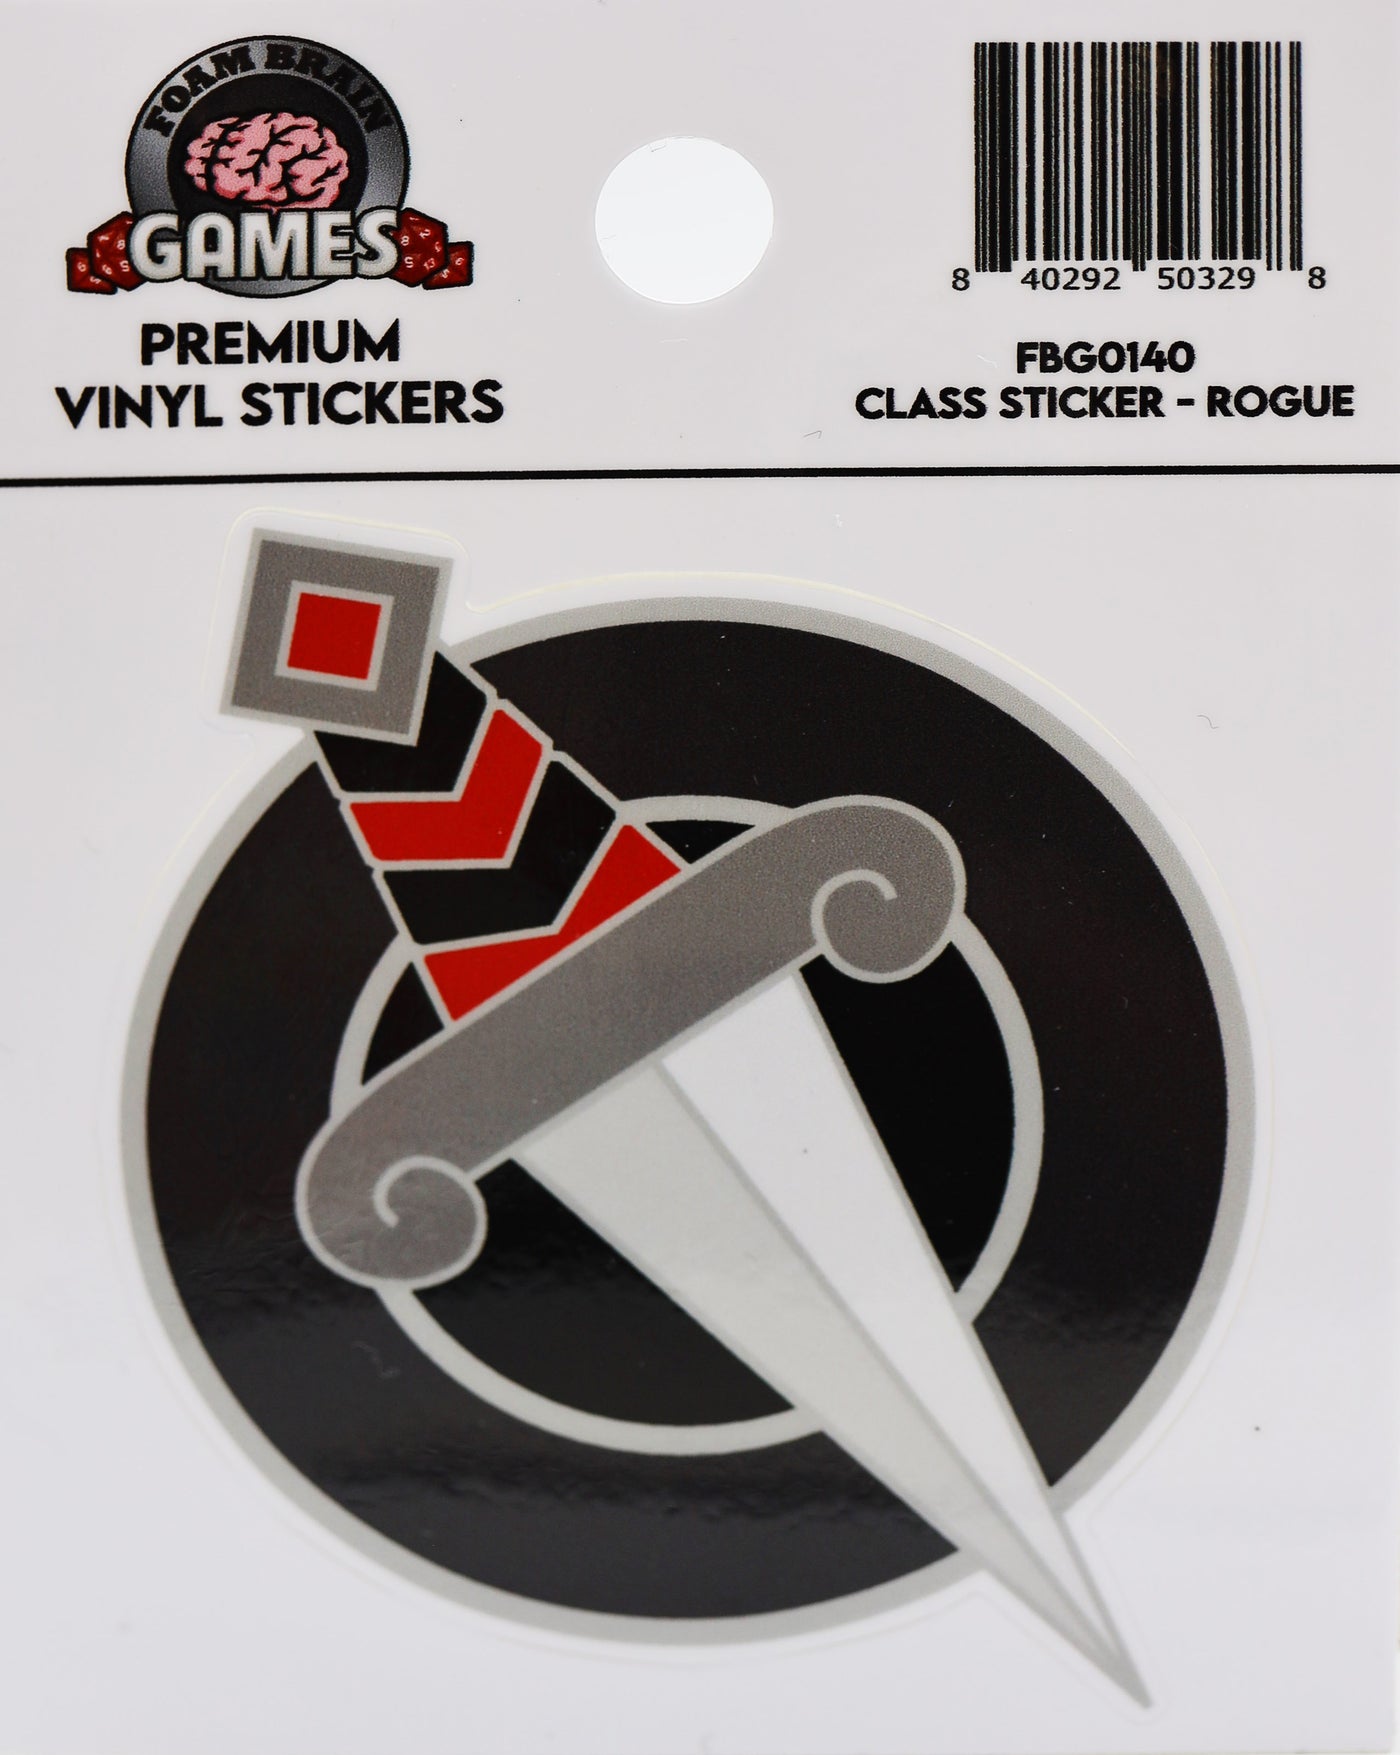 Class Sticker - Rogue Stickers Foam Brain Games